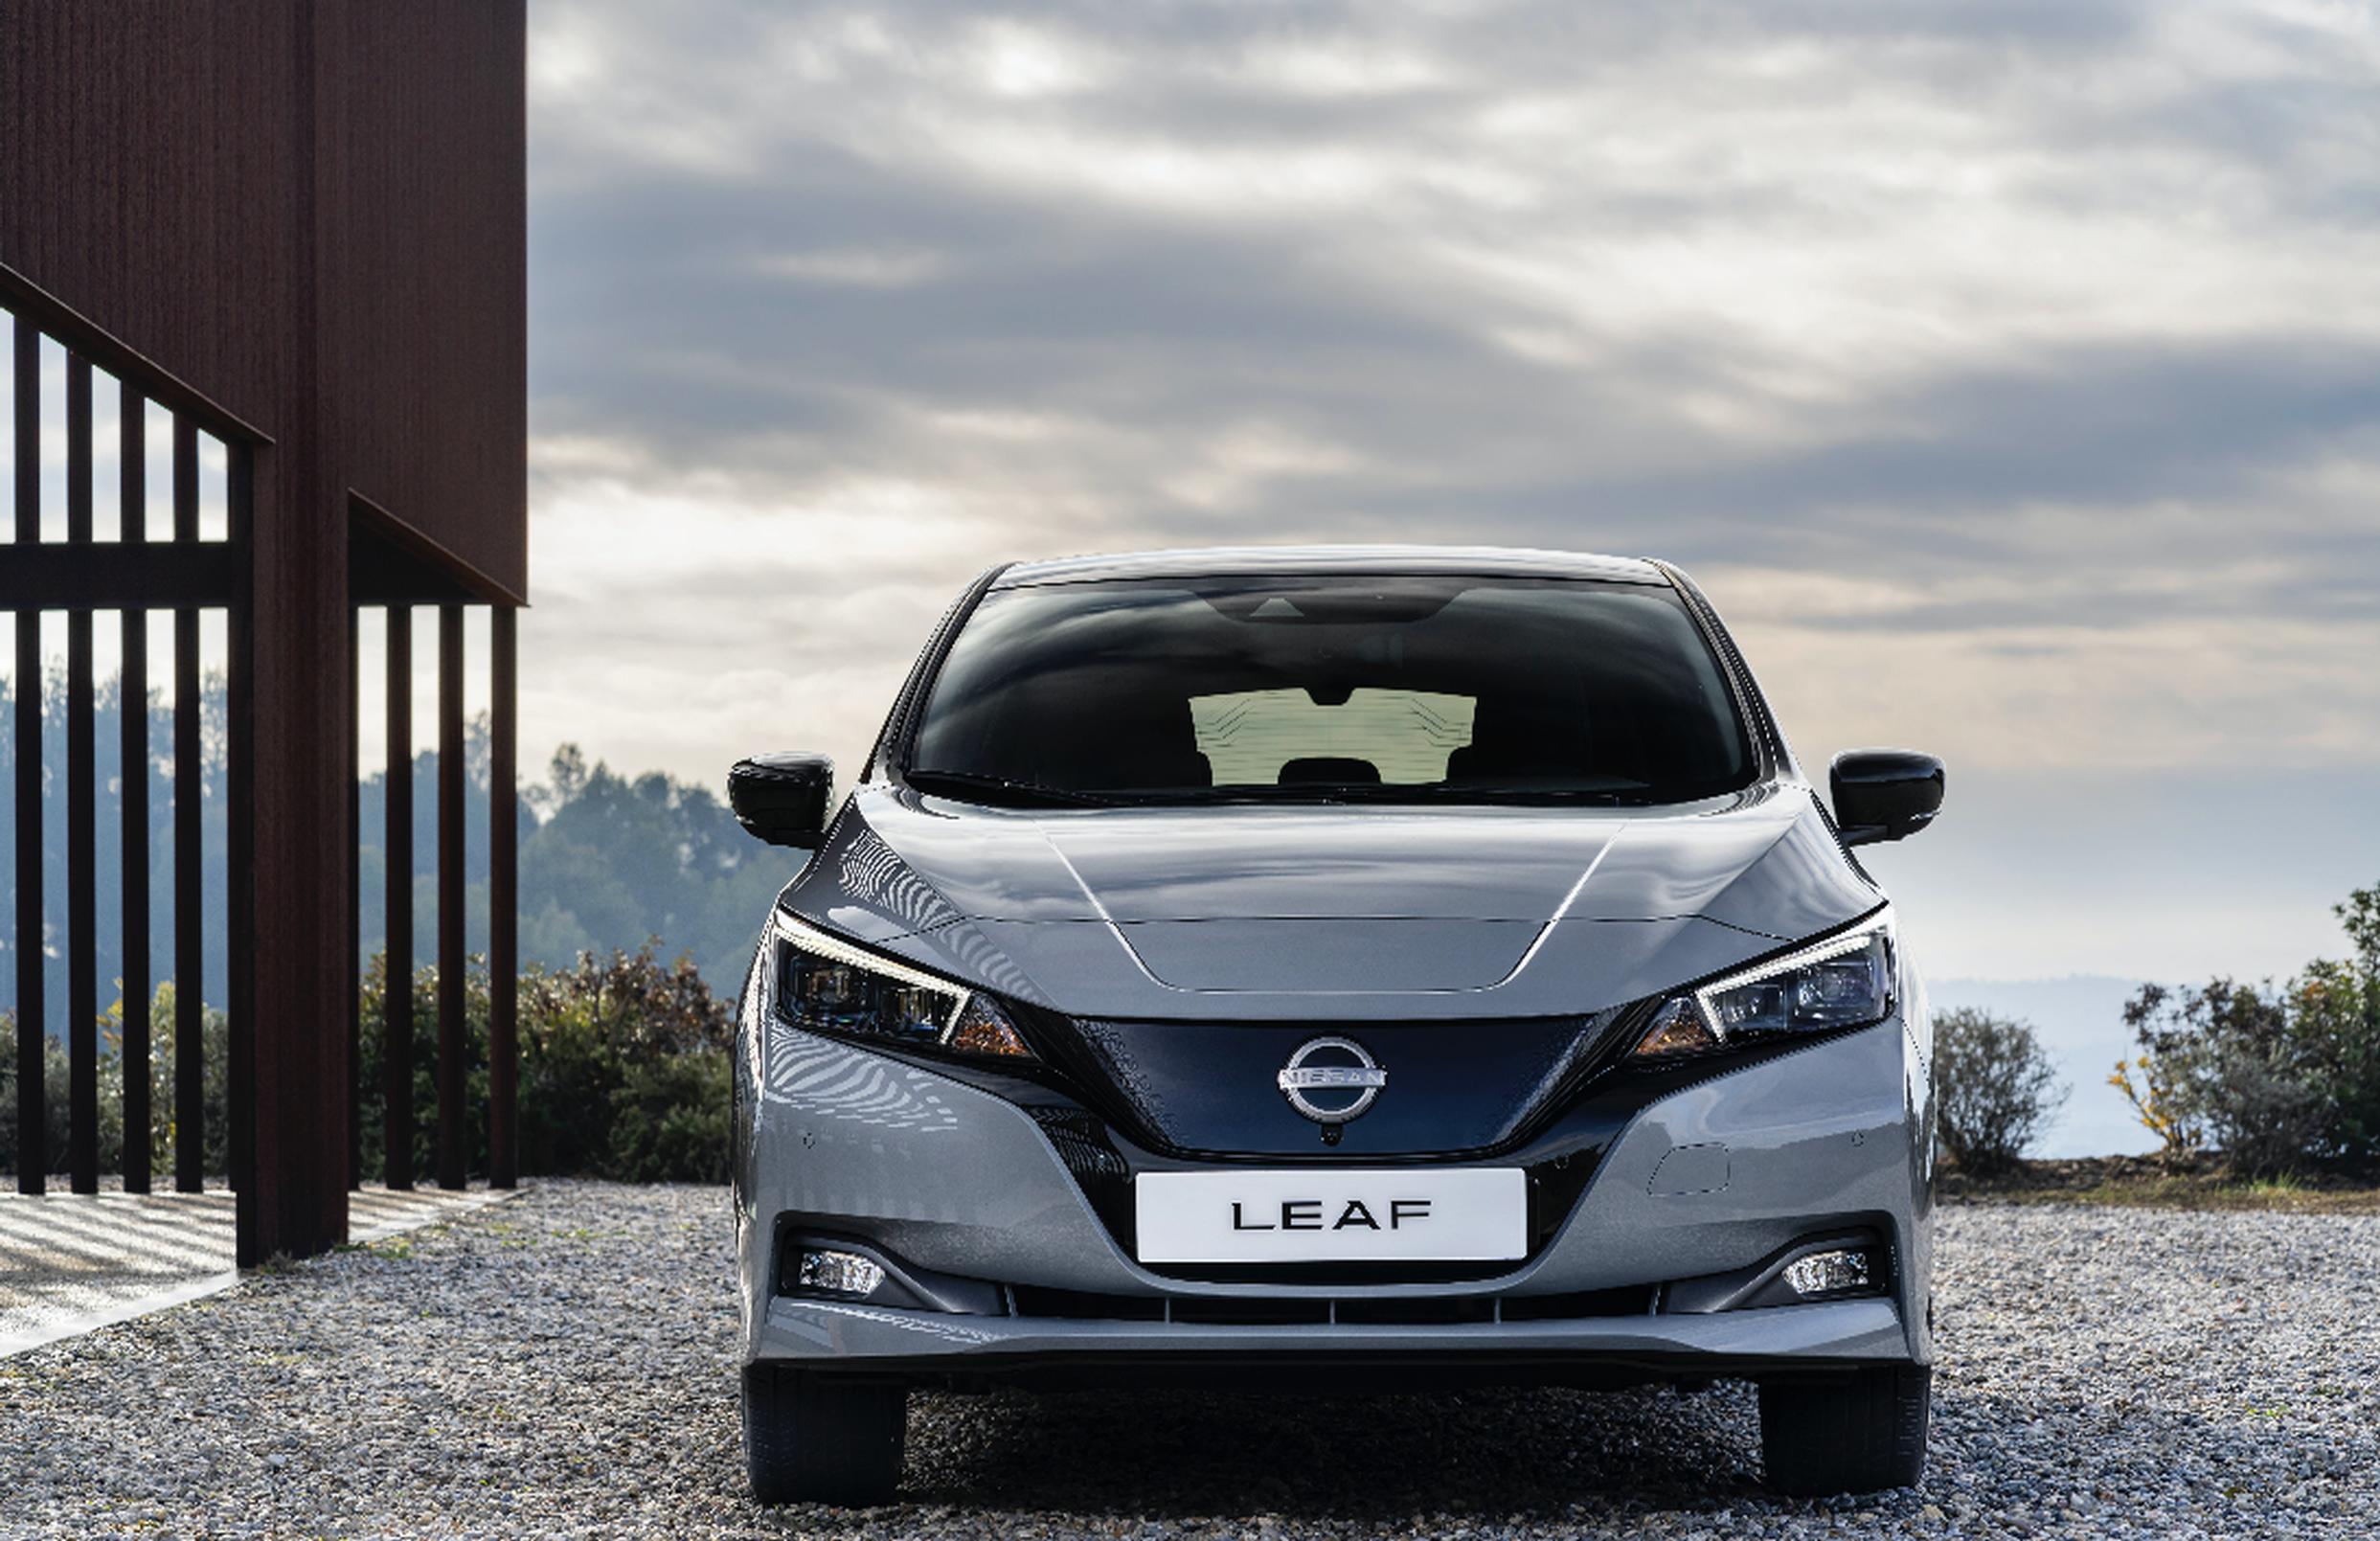 The Nissan LEAF 2022